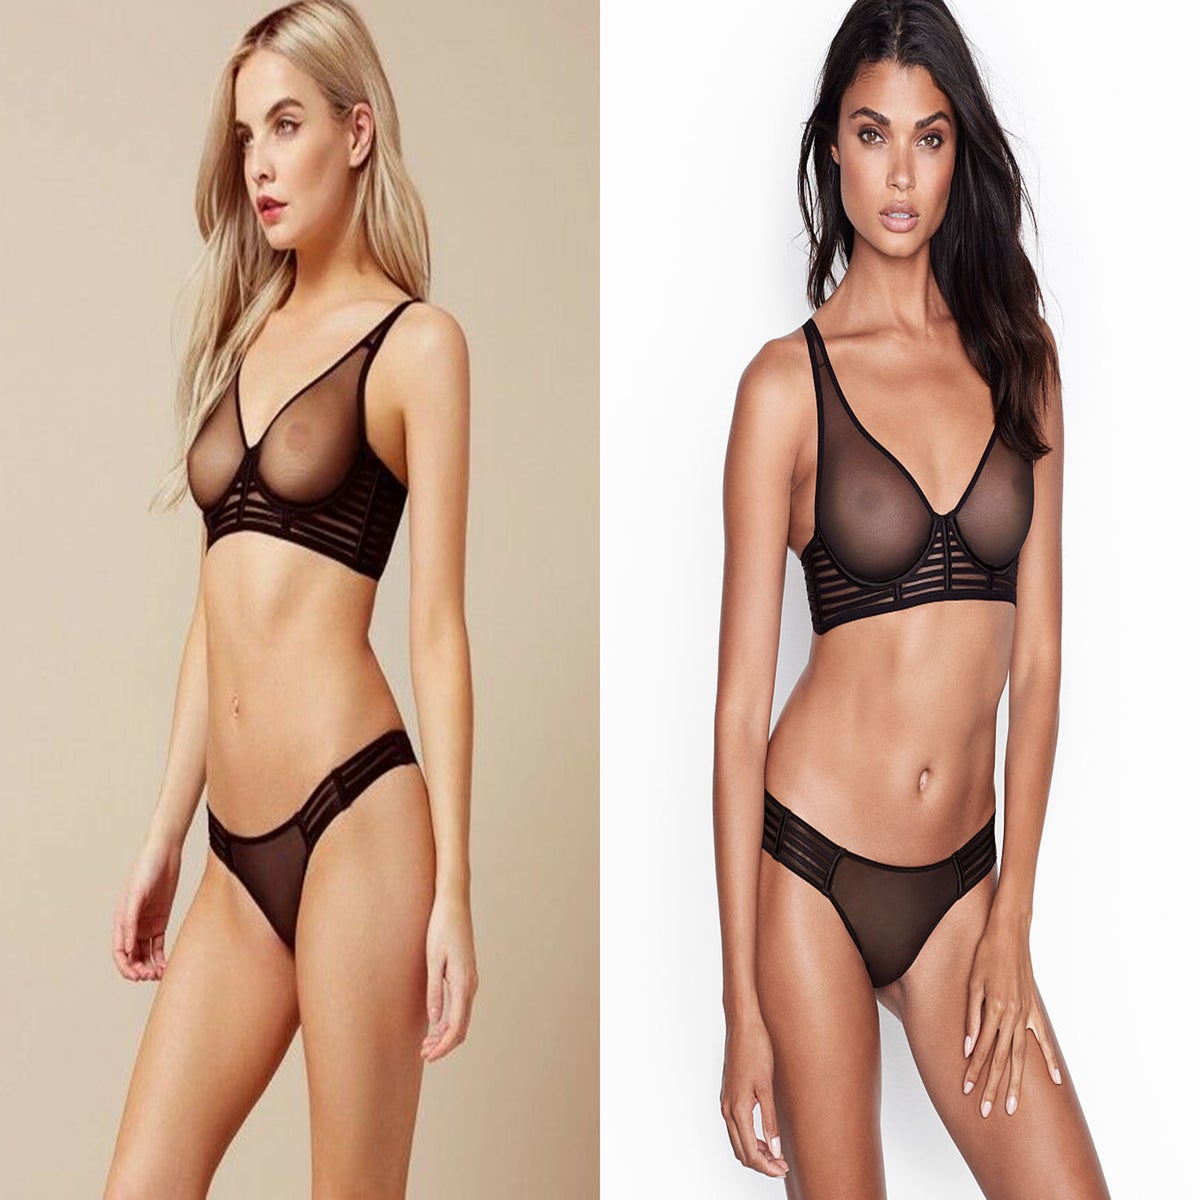 Victoria's Secret accused of copying Agent Provocateur's lingerie design